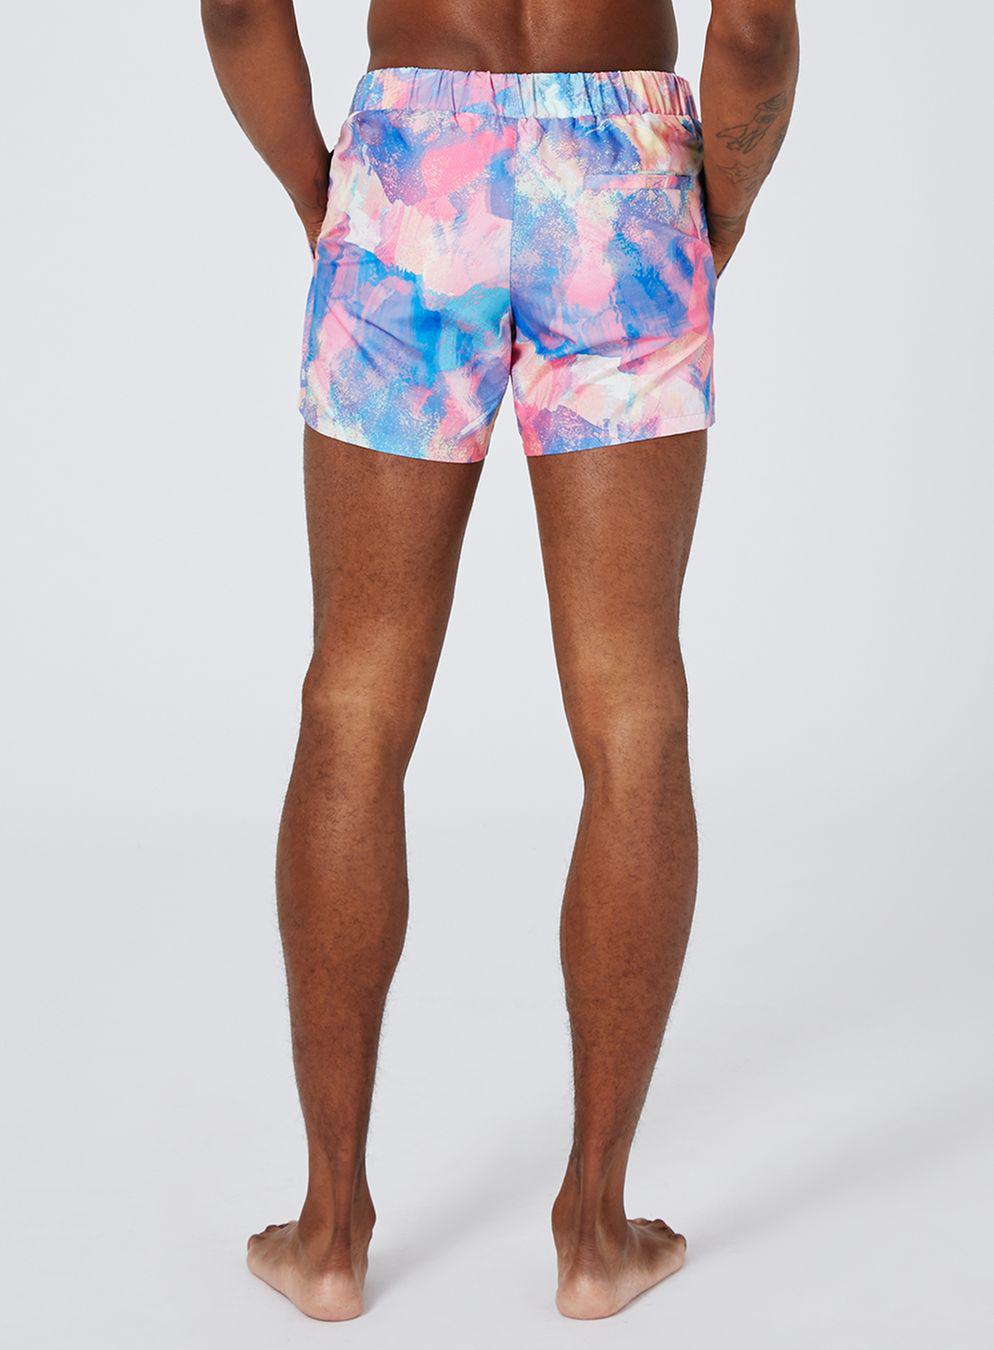 TOPMAN Synthetic Pastel Print Swim Shorts in Blue for Men - Lyst